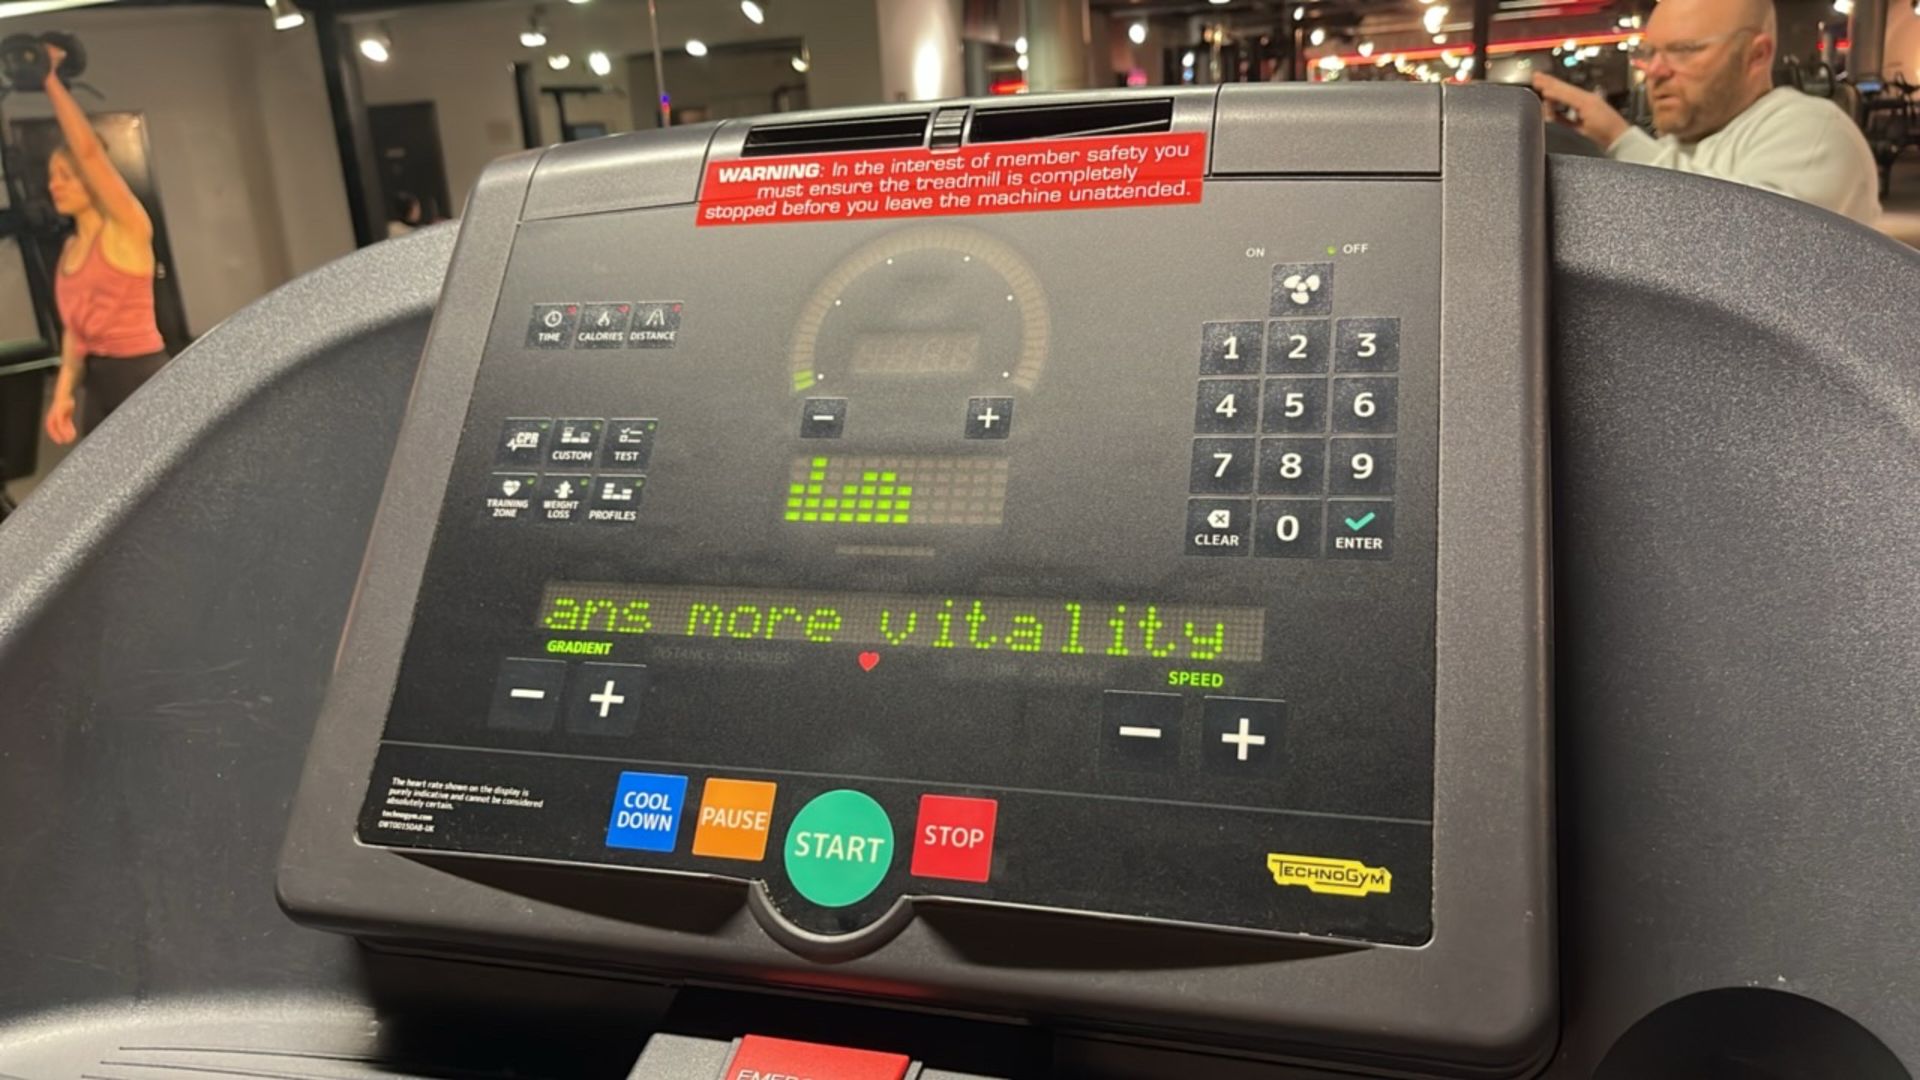 Technogym Treadmill 1000 - Image 2 of 8